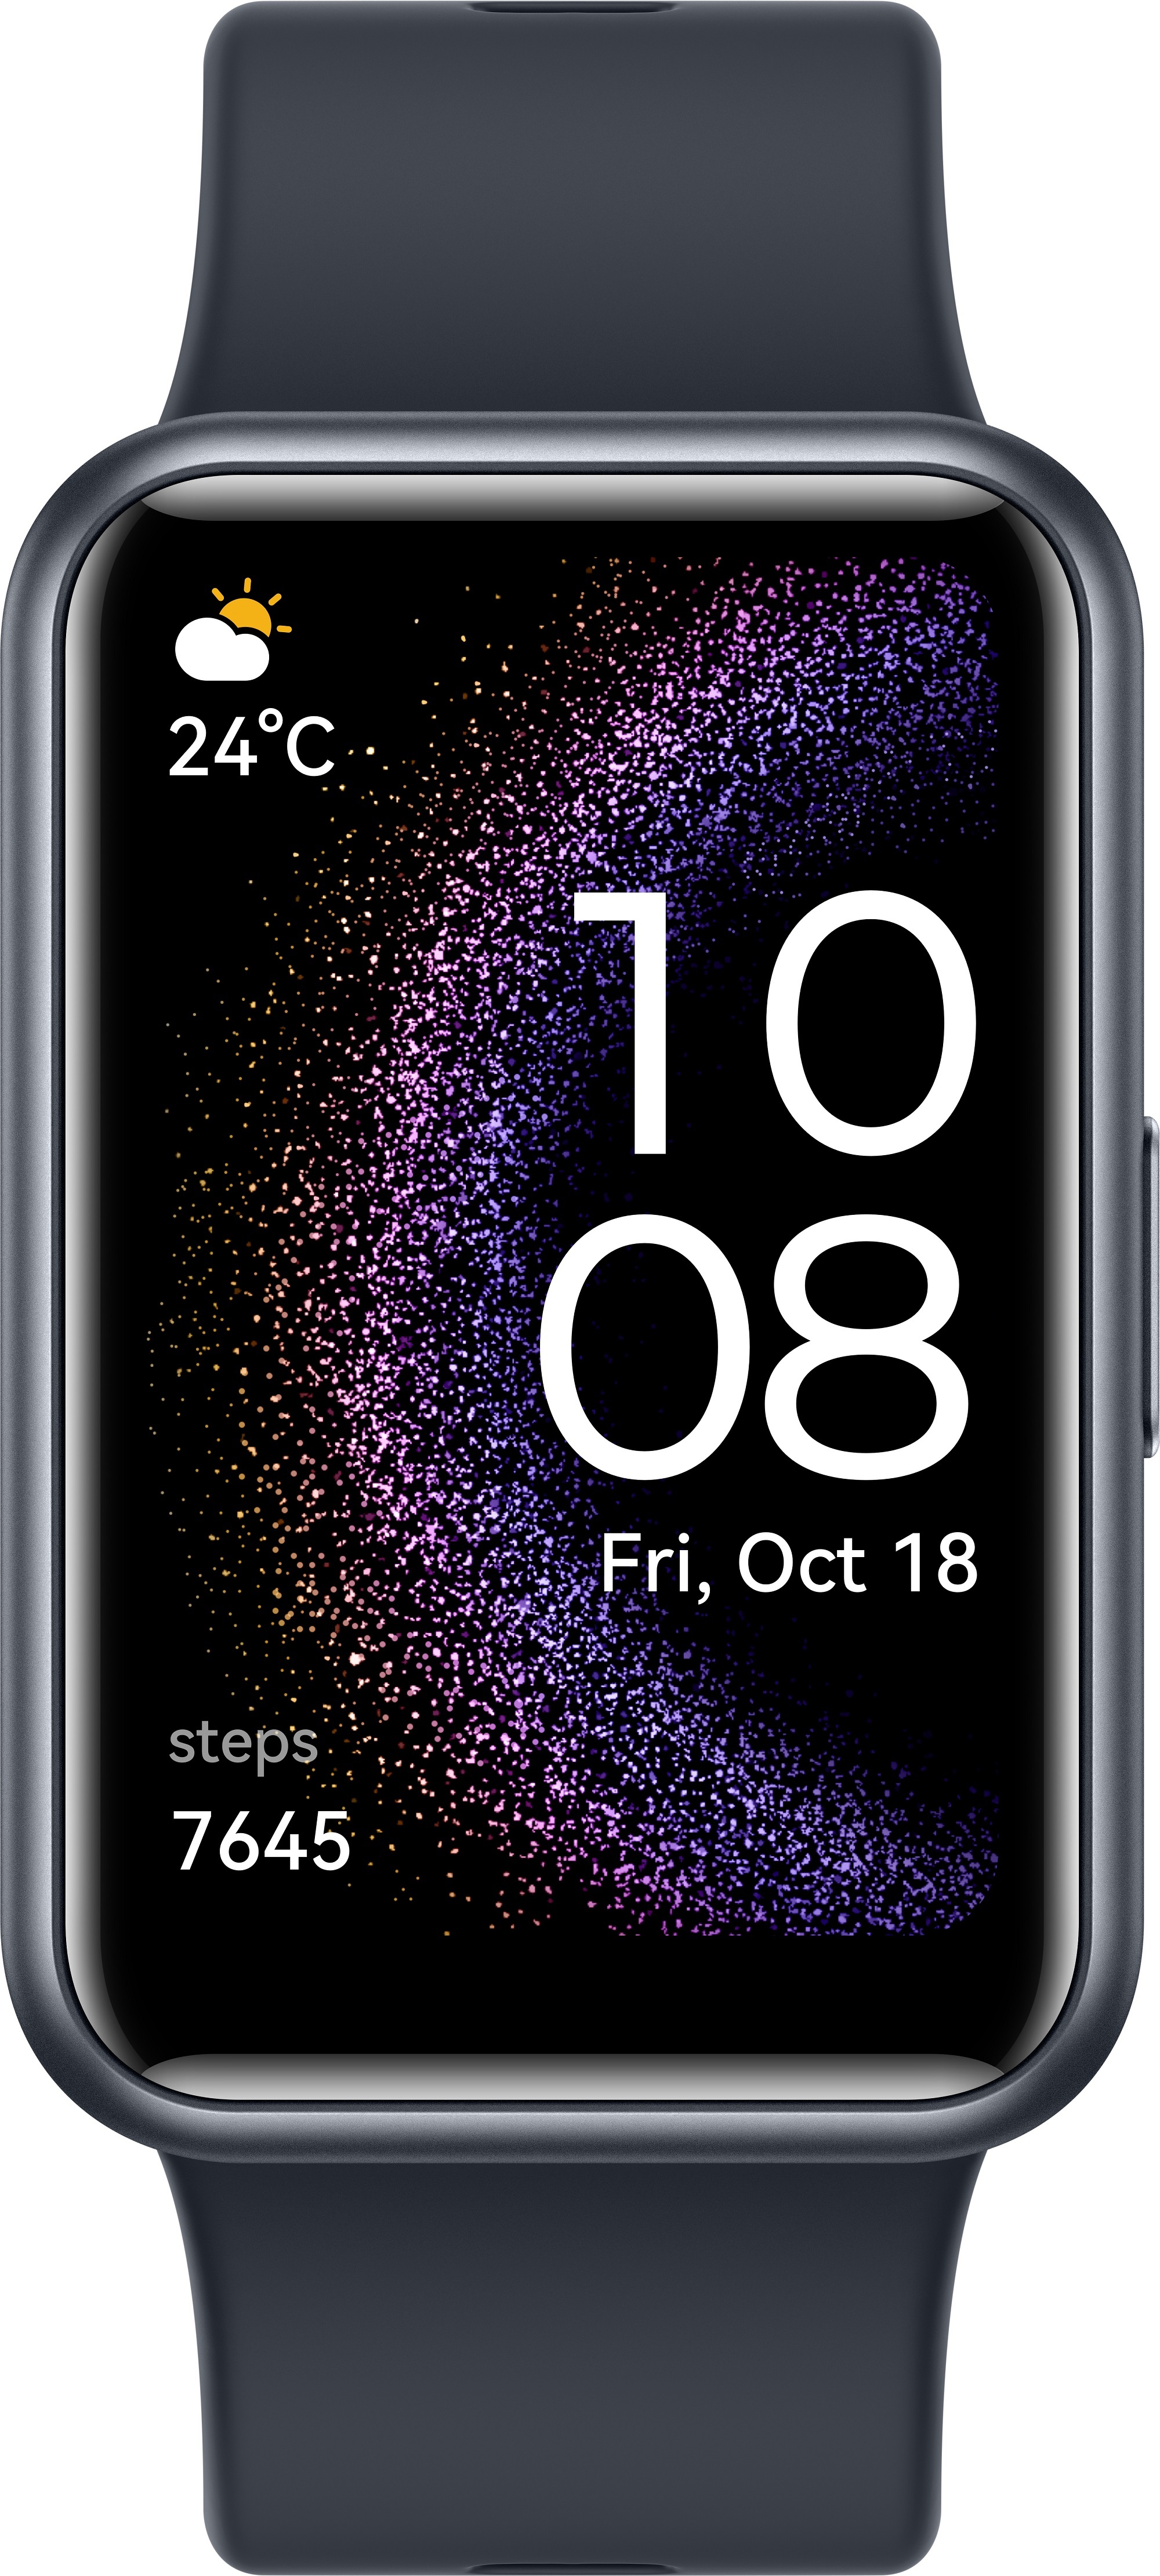 Zobrazit detail výrobku Huawei WATCH FIT SE - Starry Black